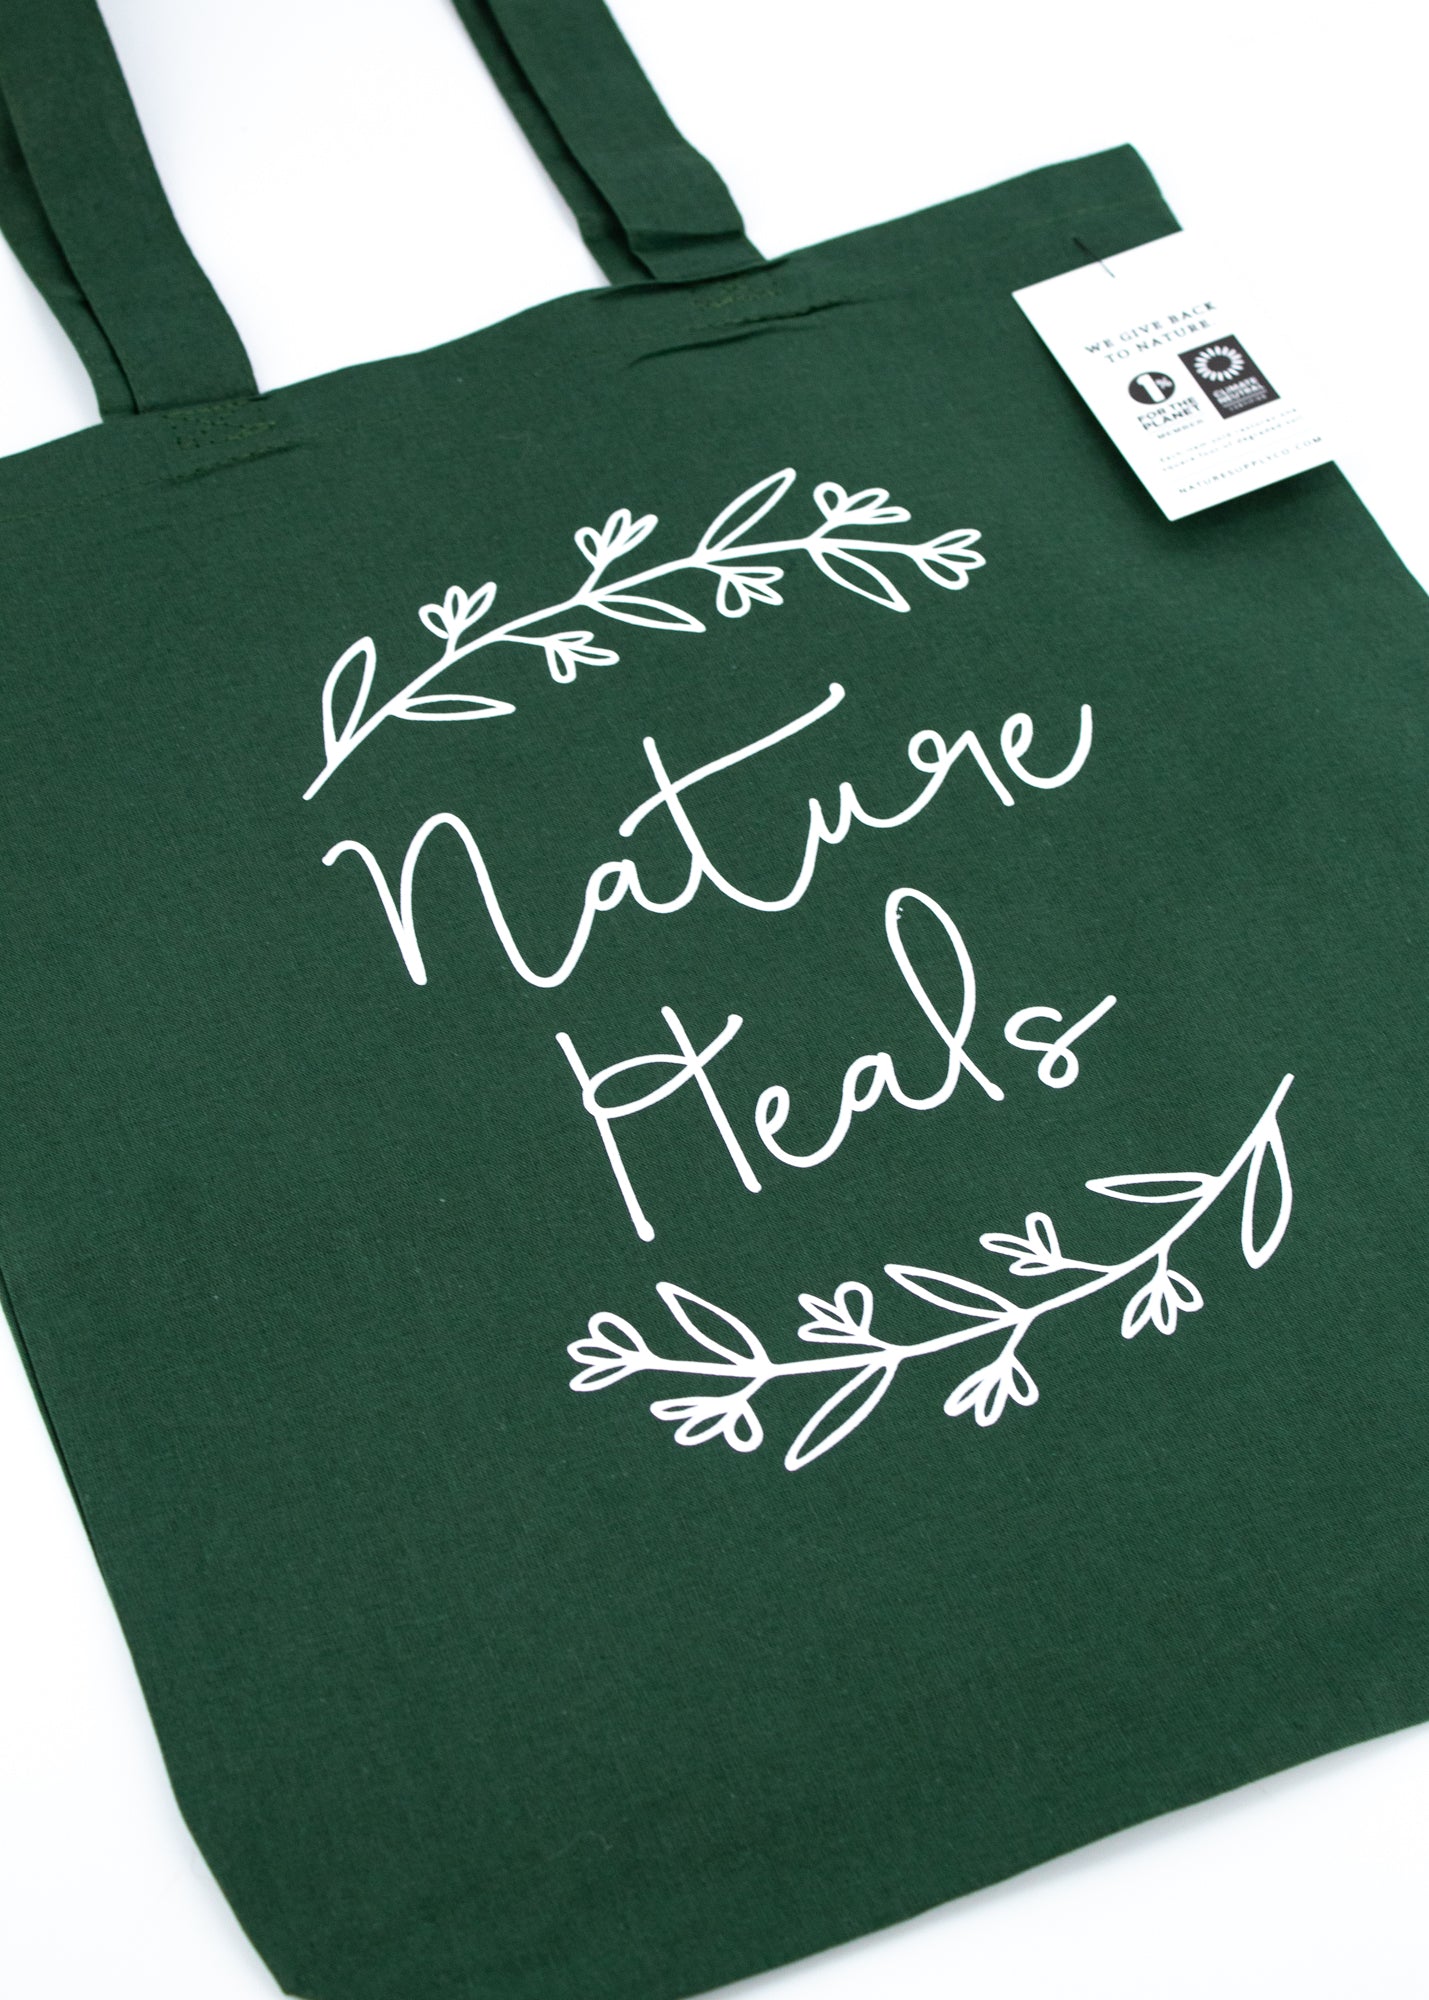 Small Green Tote Bag - "Nature Heals" -  - Nature Supply Co. - Wild Lark